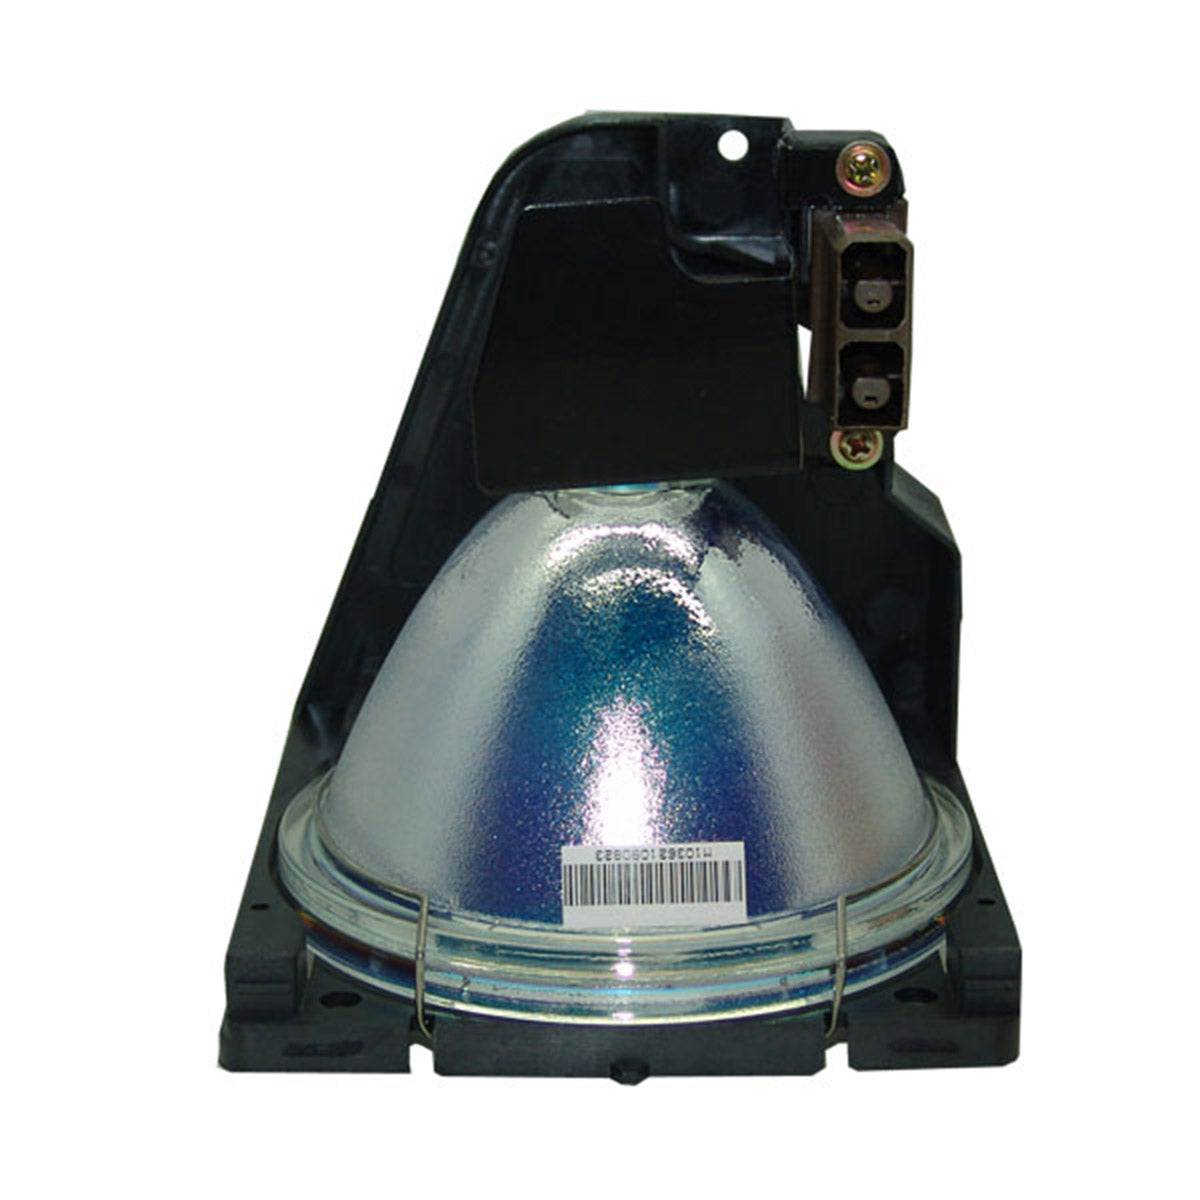 Boxlight MP25T-930 Compatible Projector Lamp Module